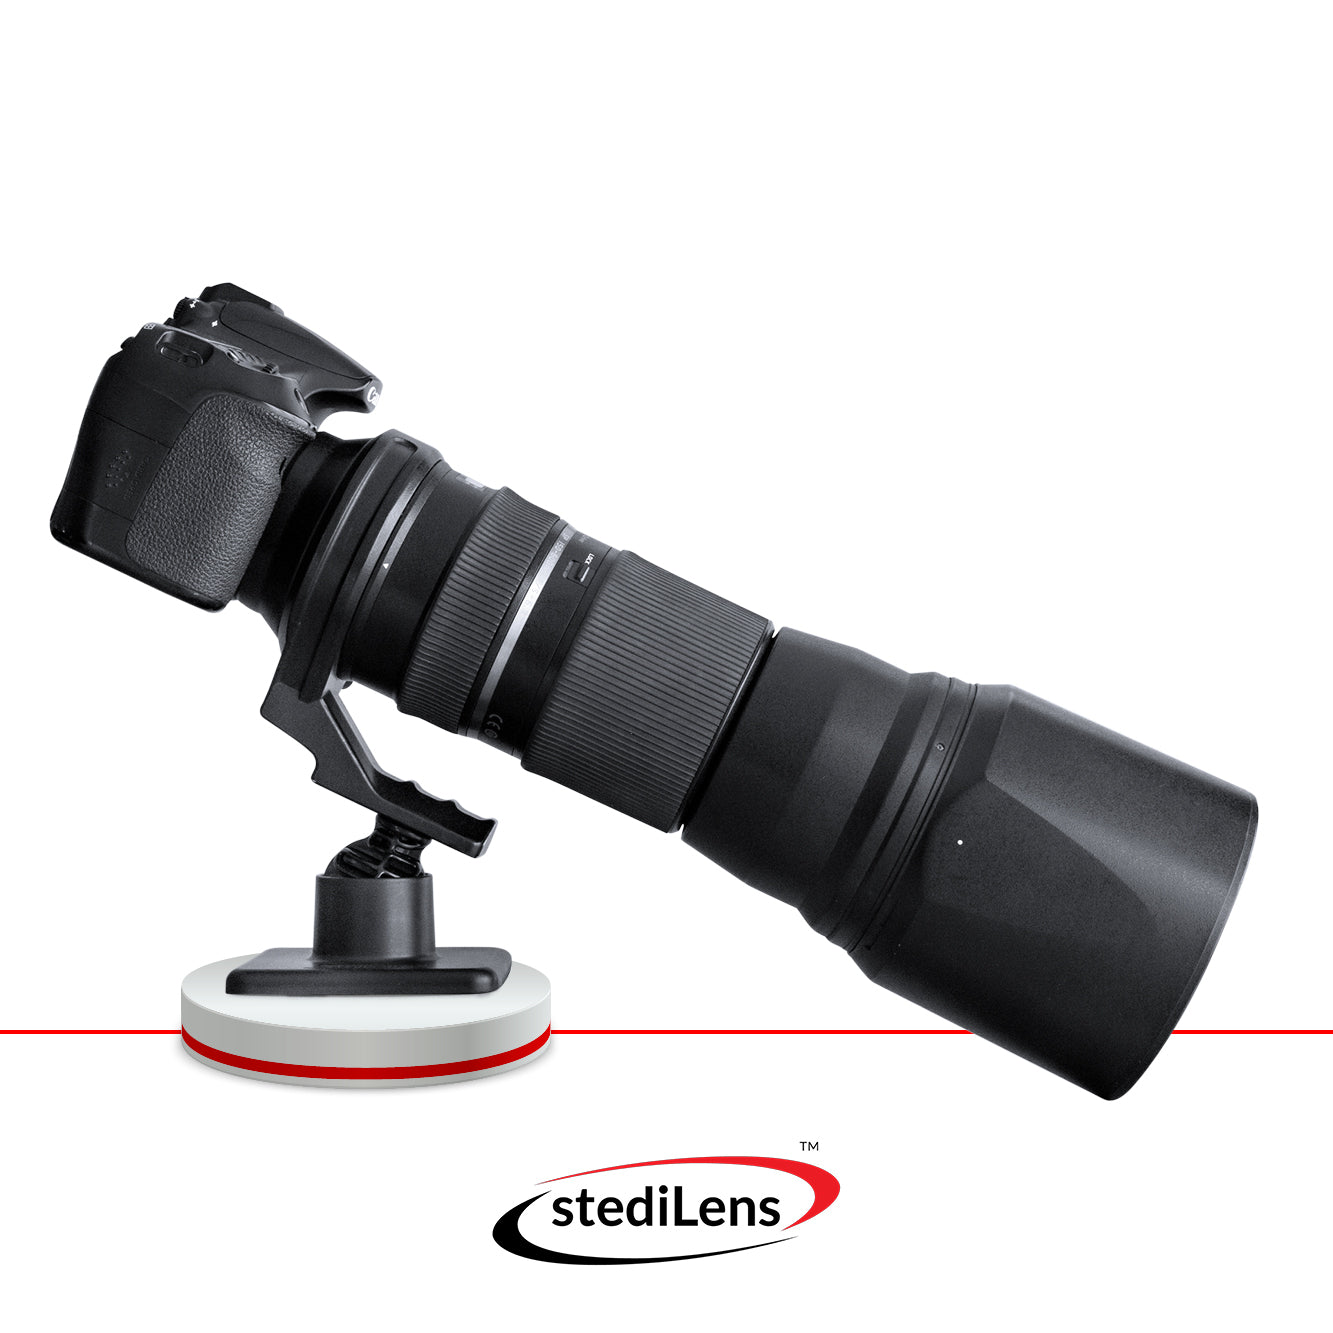 StediLens Base Unit Camera tek